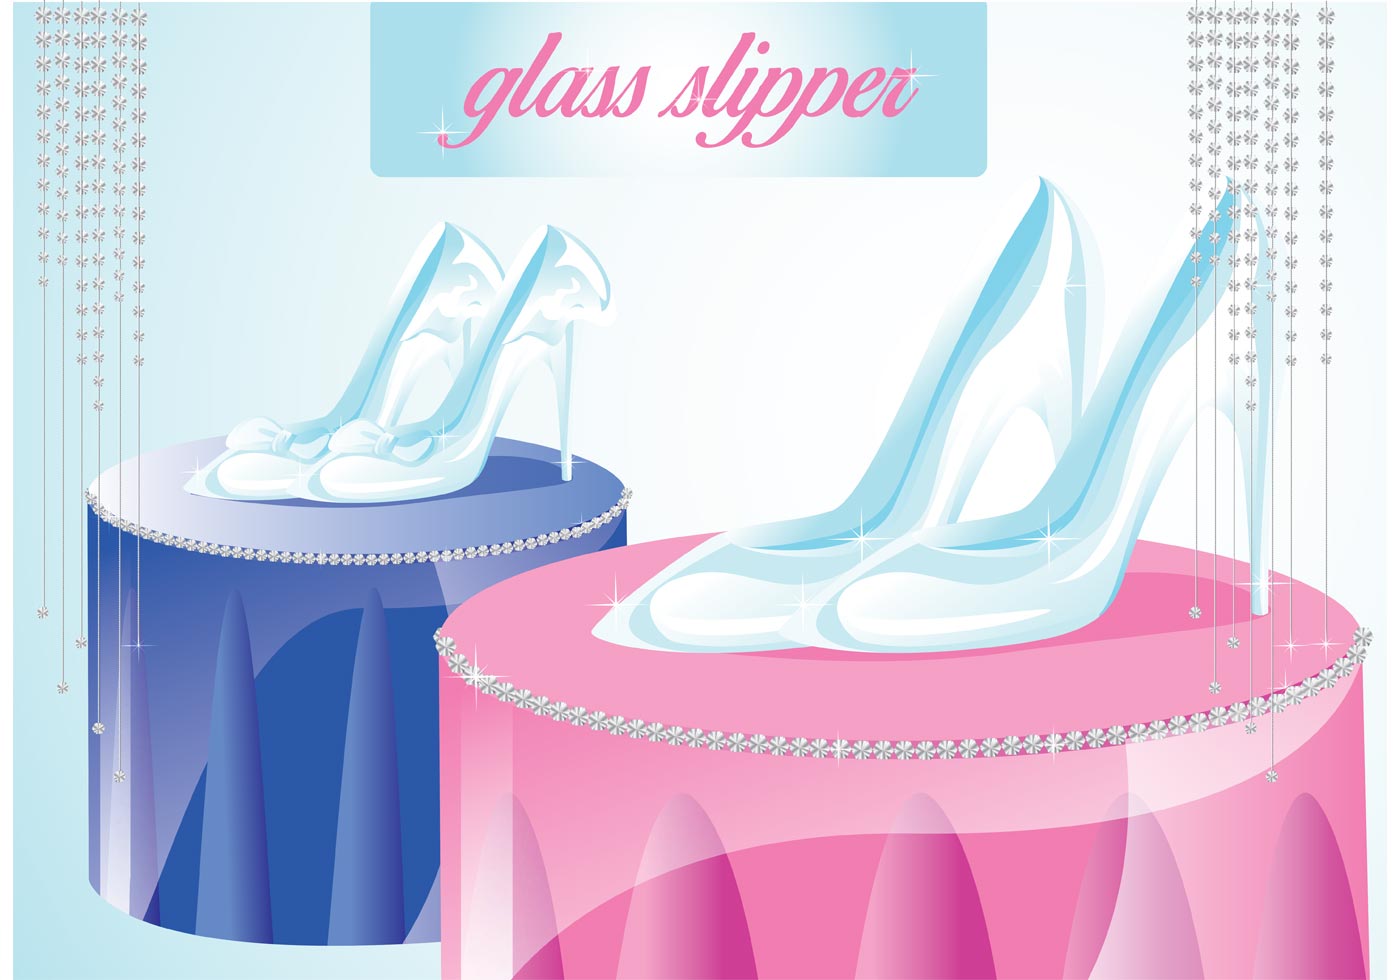 Free Vector  Cinderella glass shoe